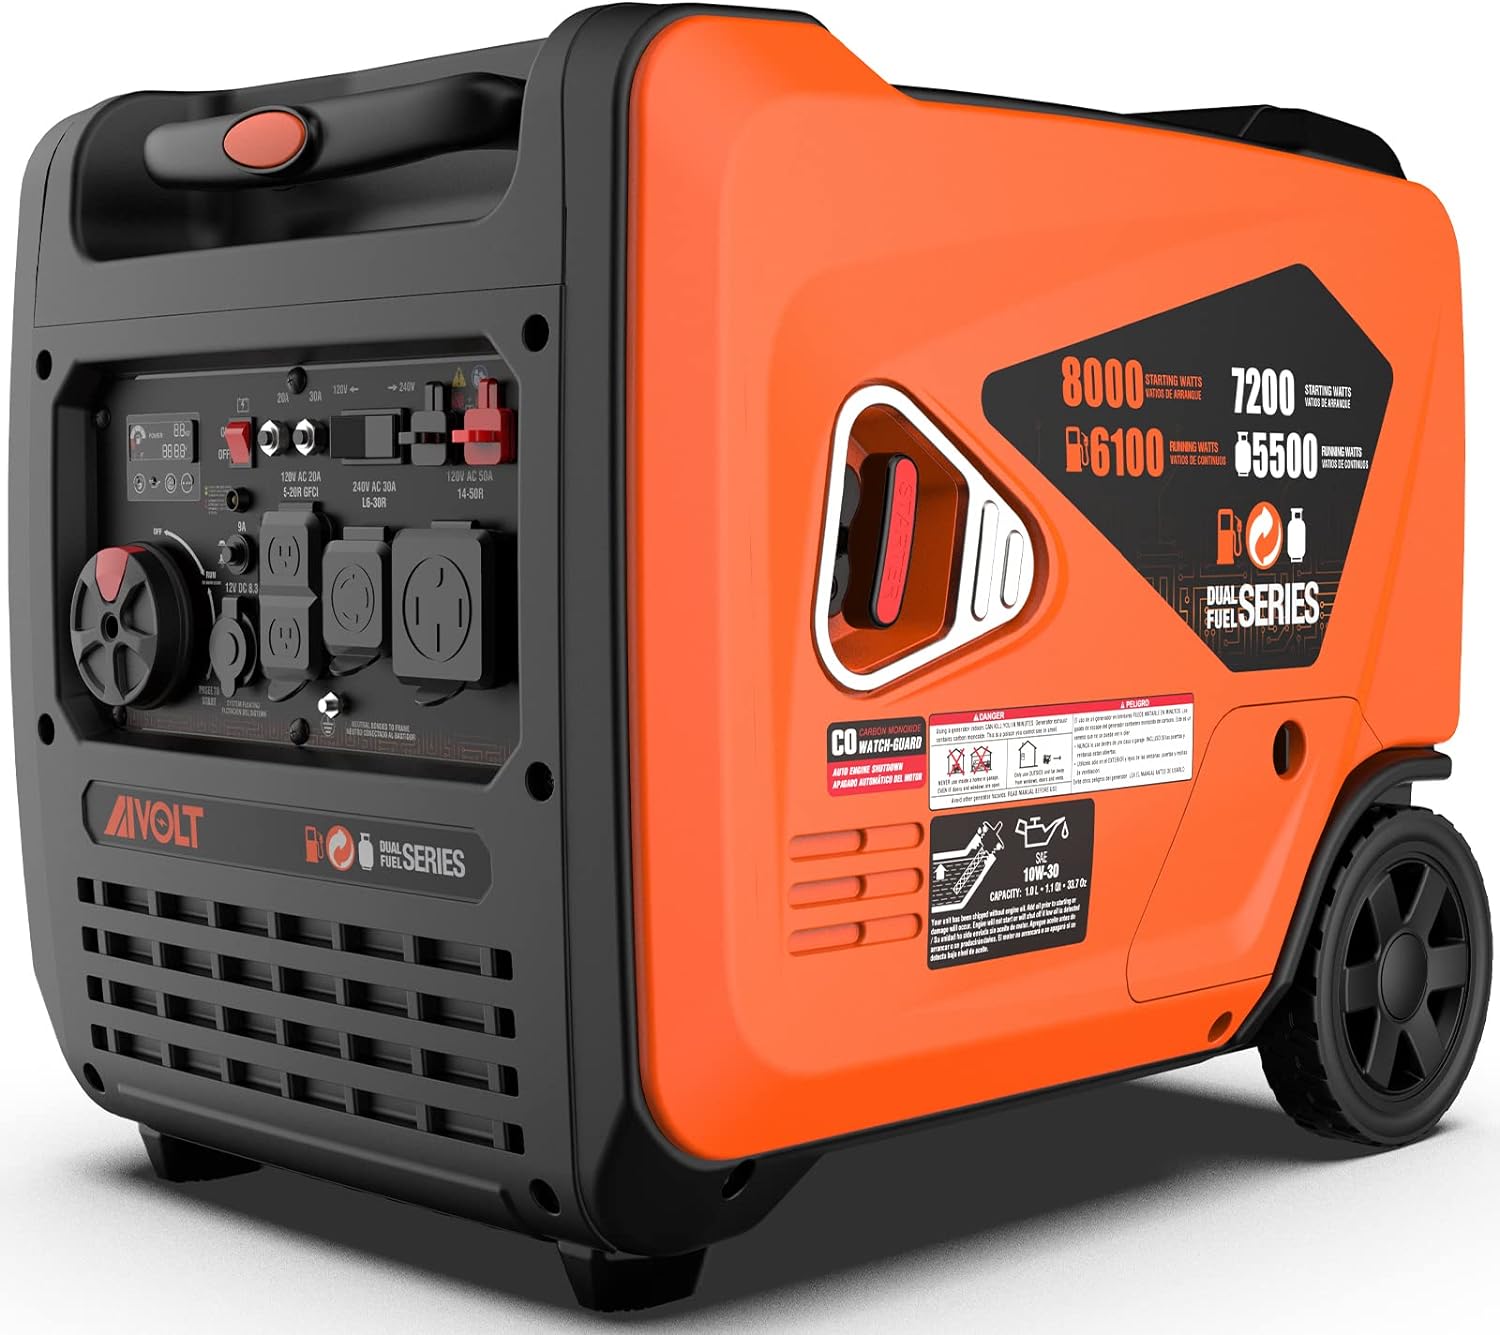 AIVOLT 8000 Watts Dual Fuel Portable Inverter Generator Review